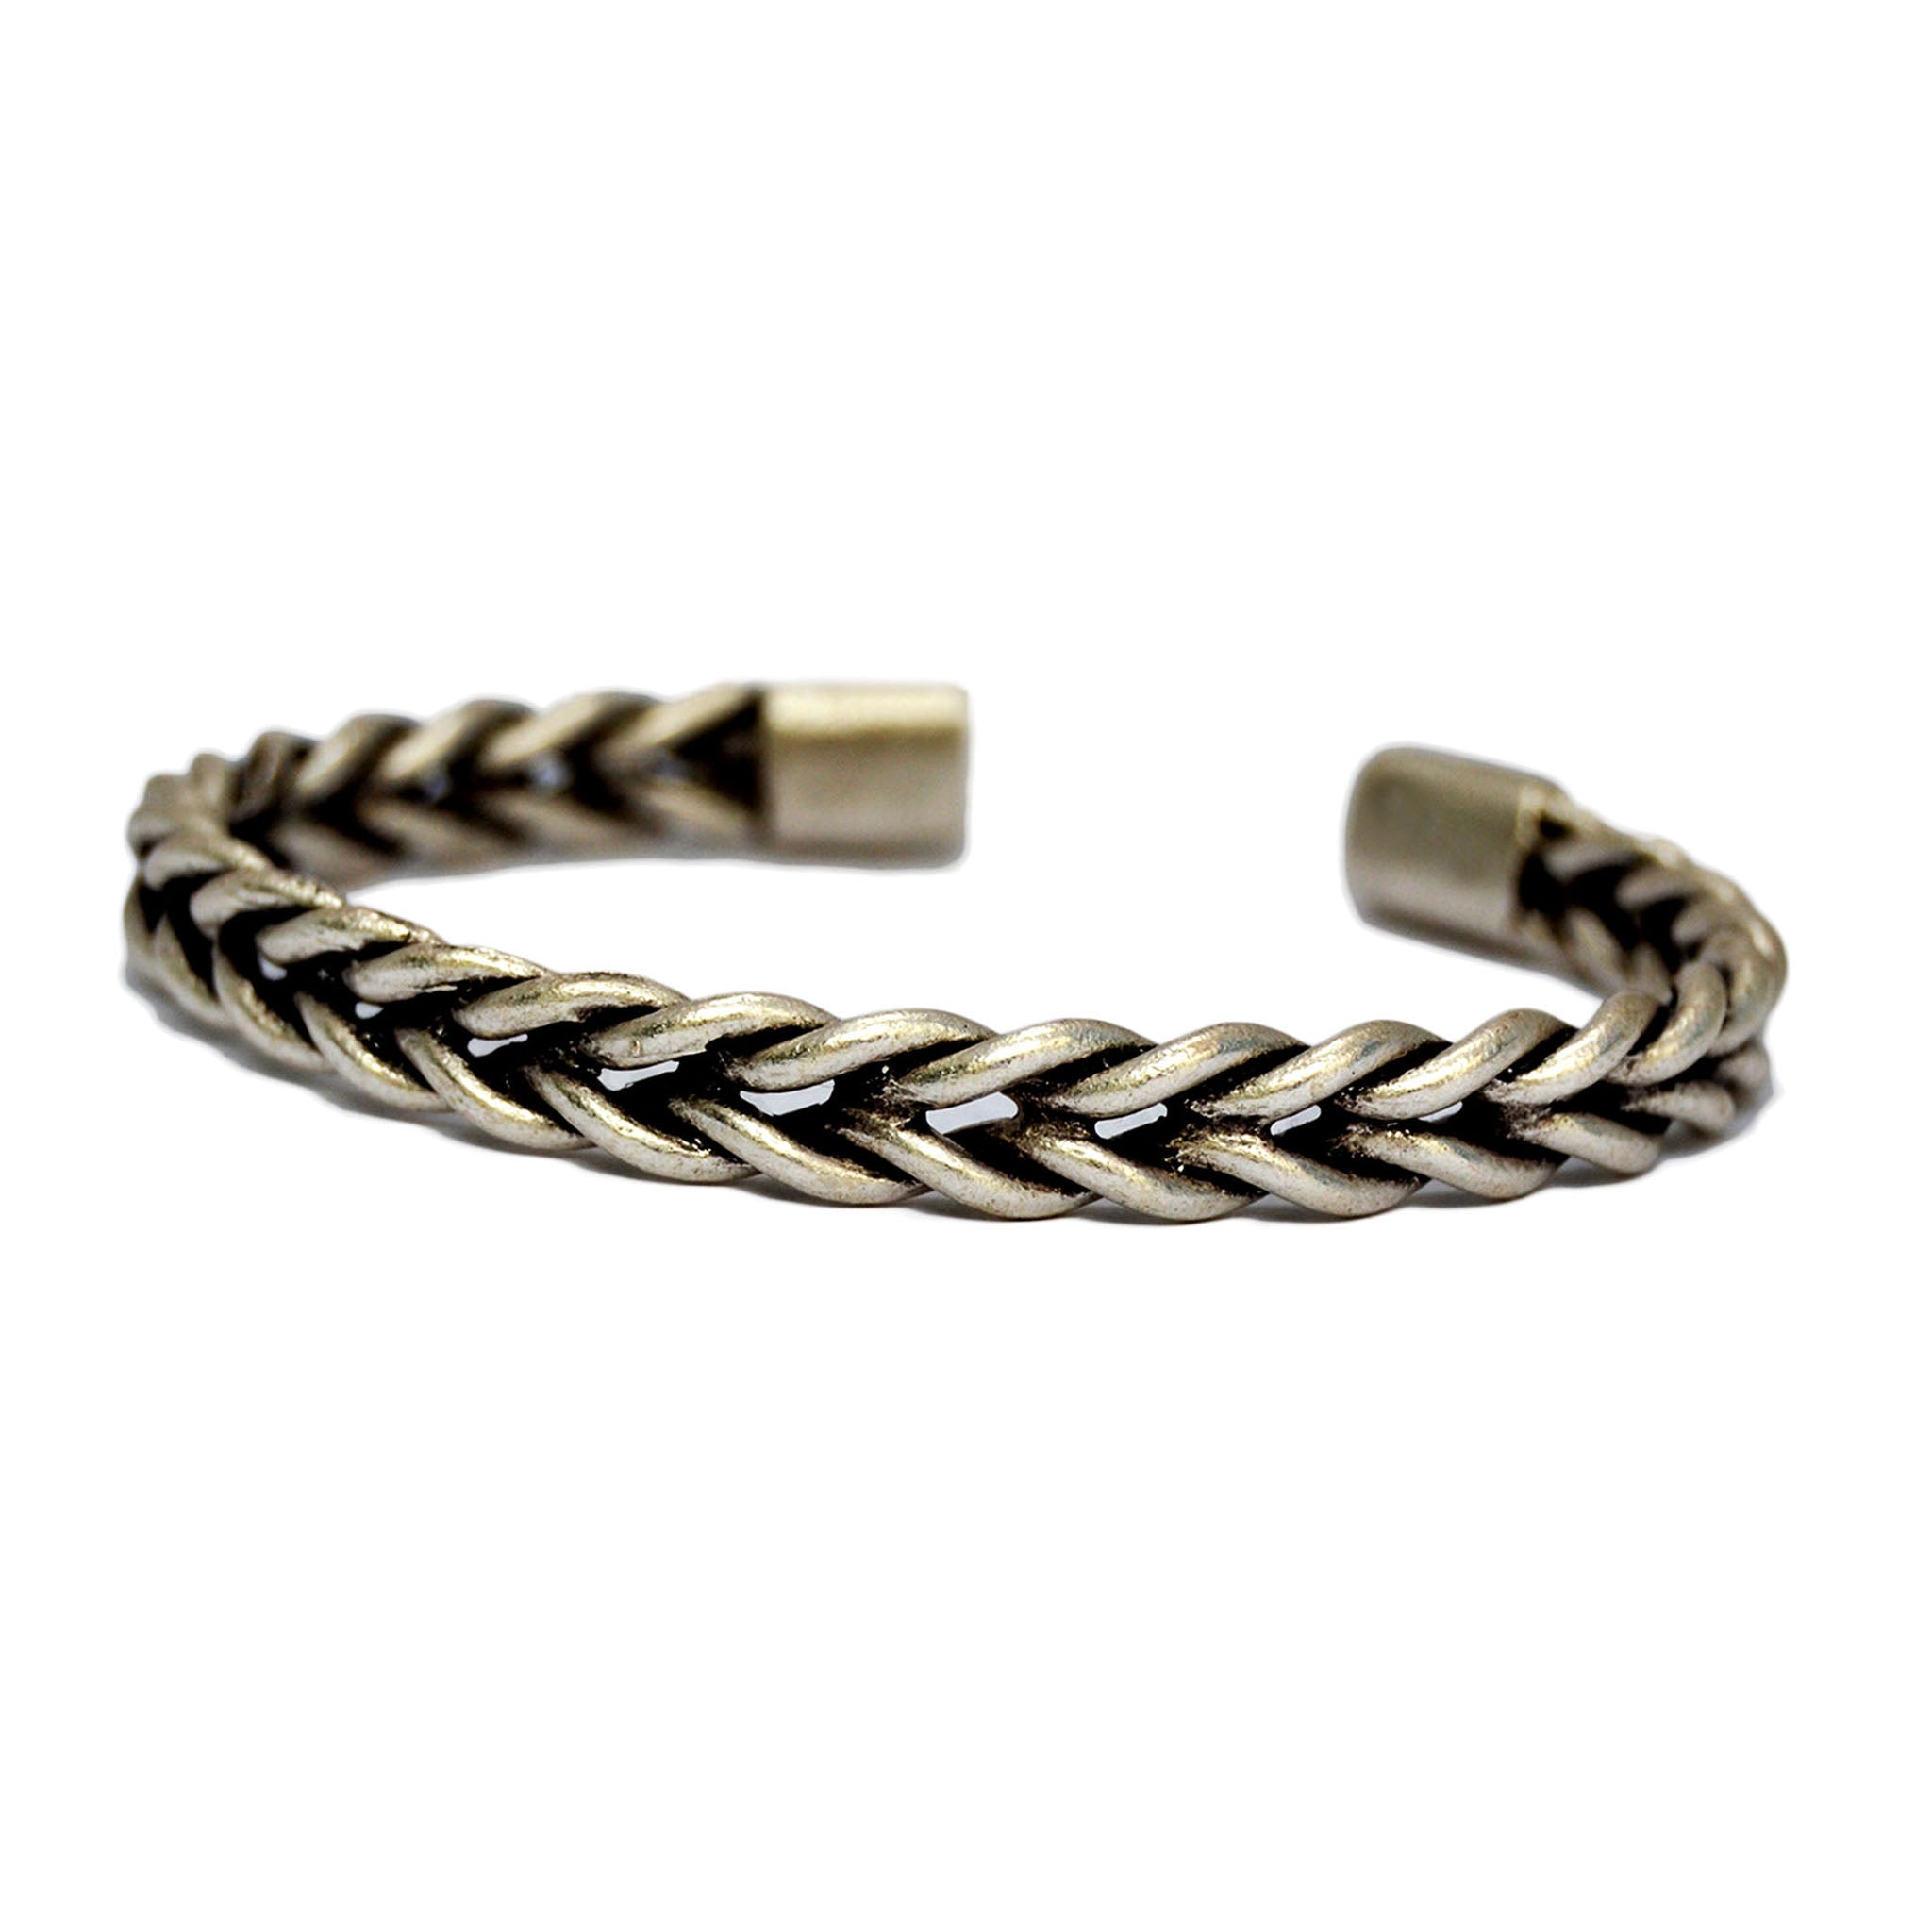 Boho braided bracelet